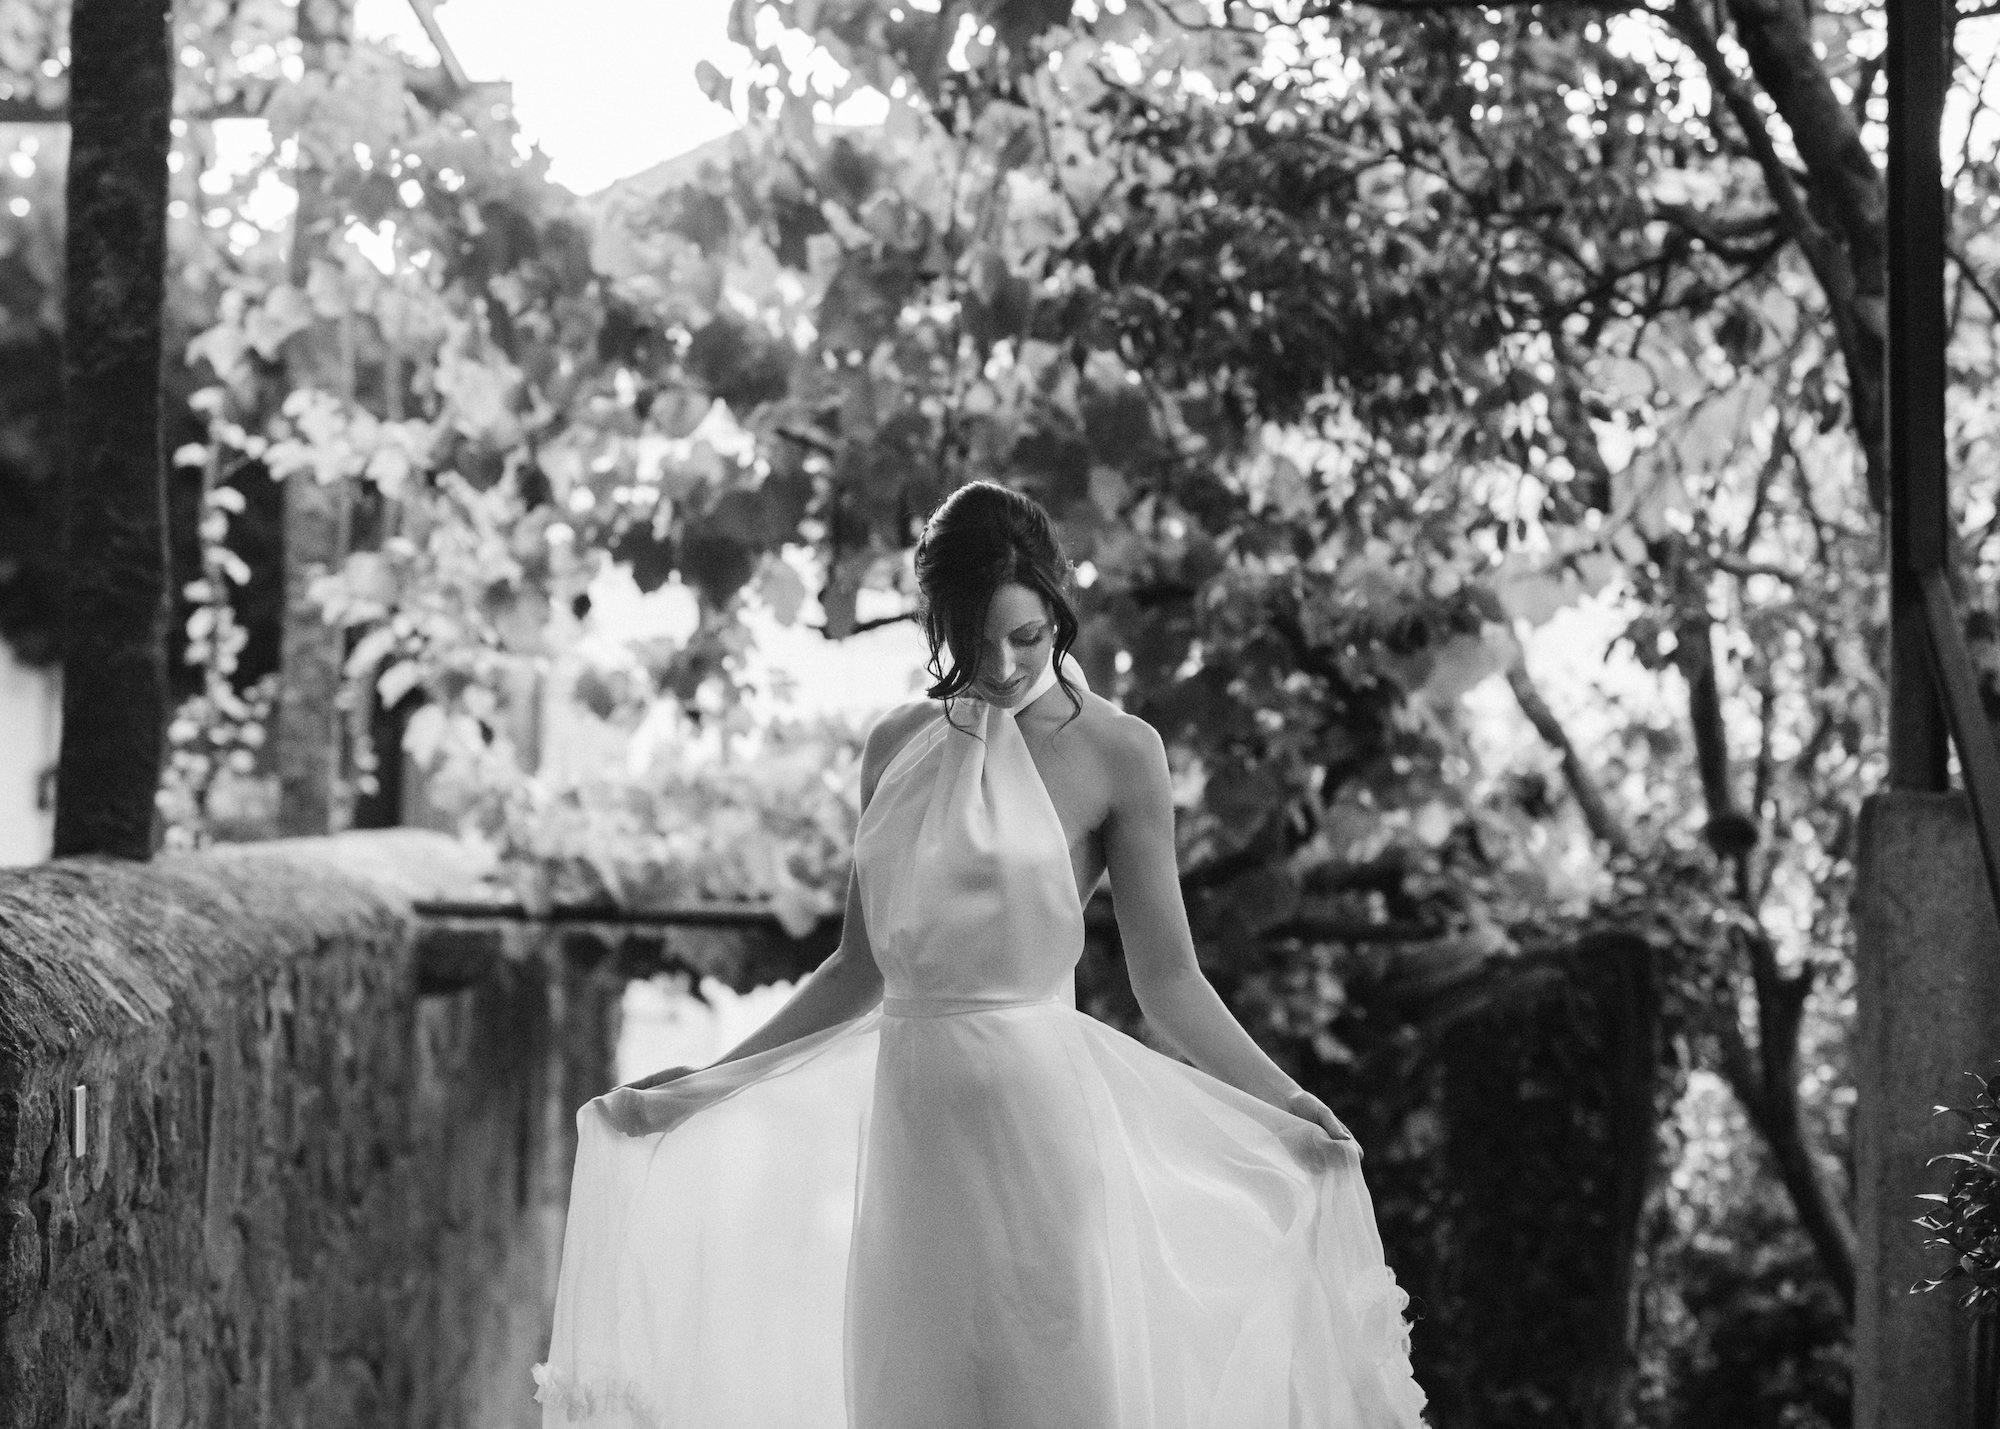 Beautiful bride Amy wore a wedding dress by Halfpenny London